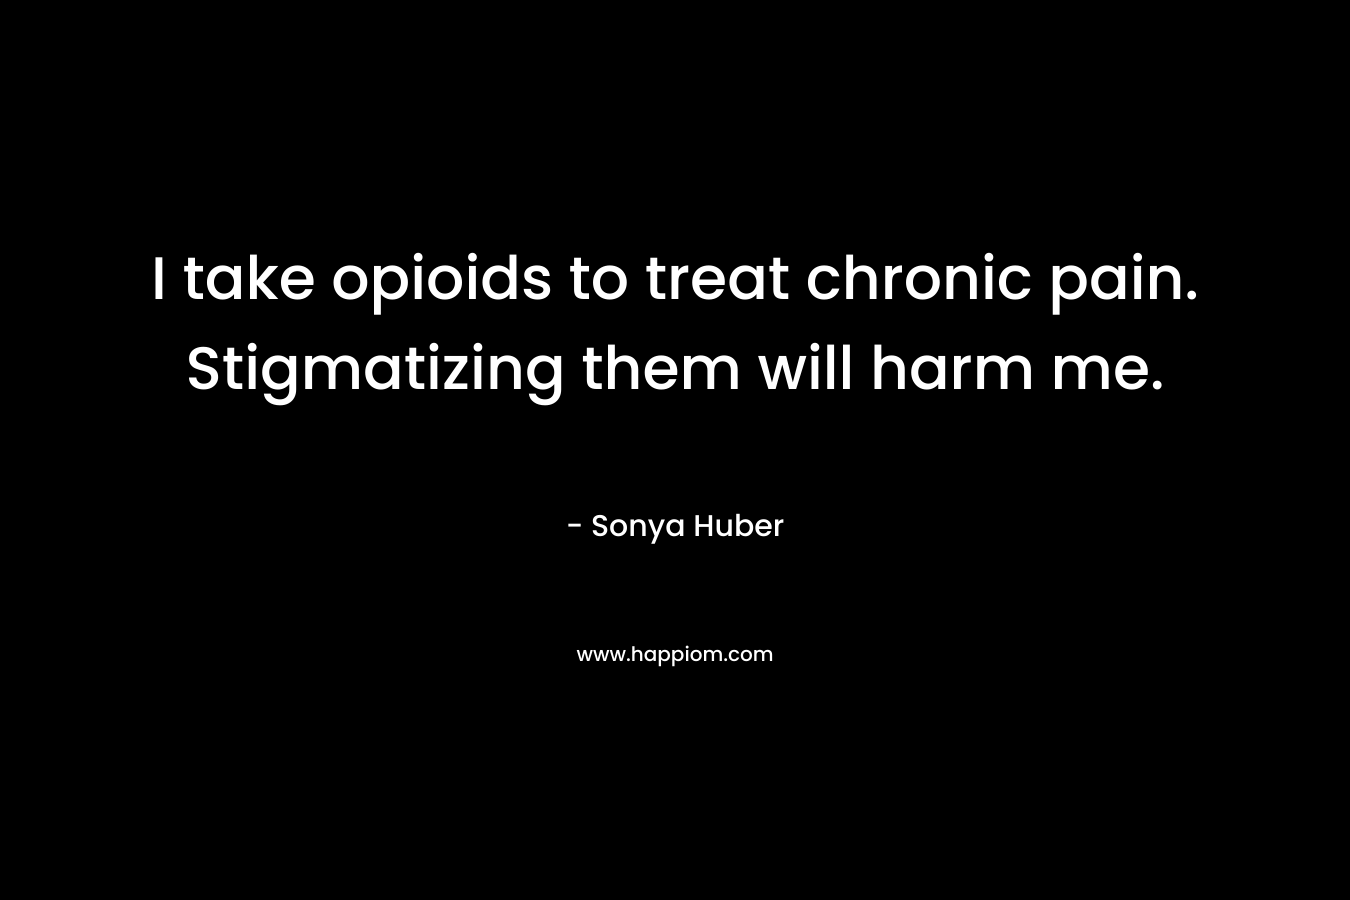 I take opioids to treat chronic pain. Stigmatizing them will harm me.